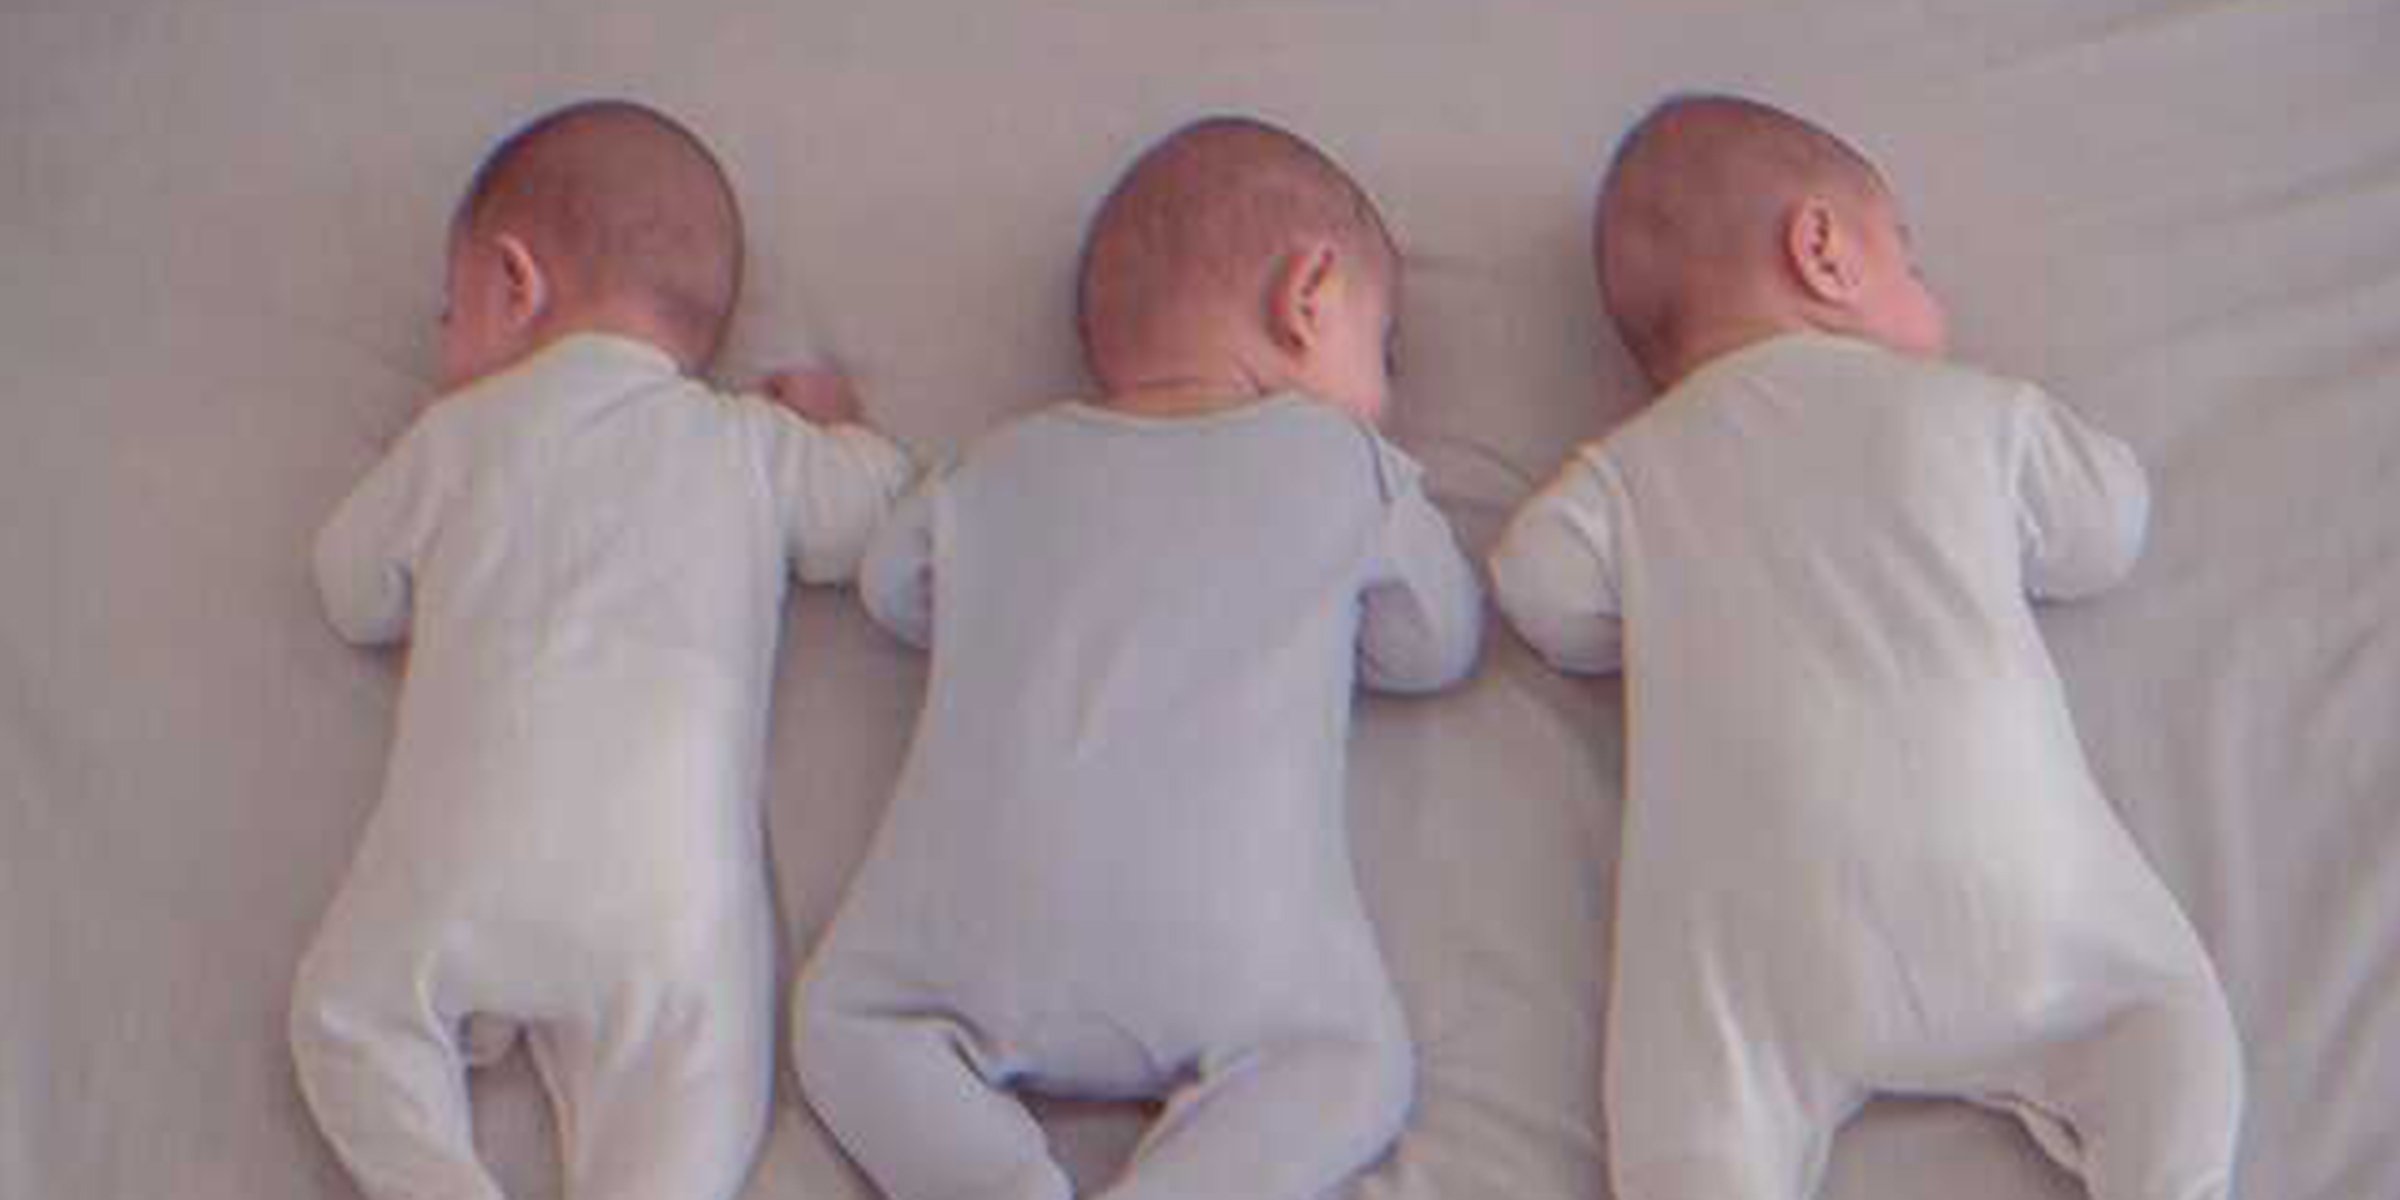 Triplets sleeping on a bed | Source: Shutterstock